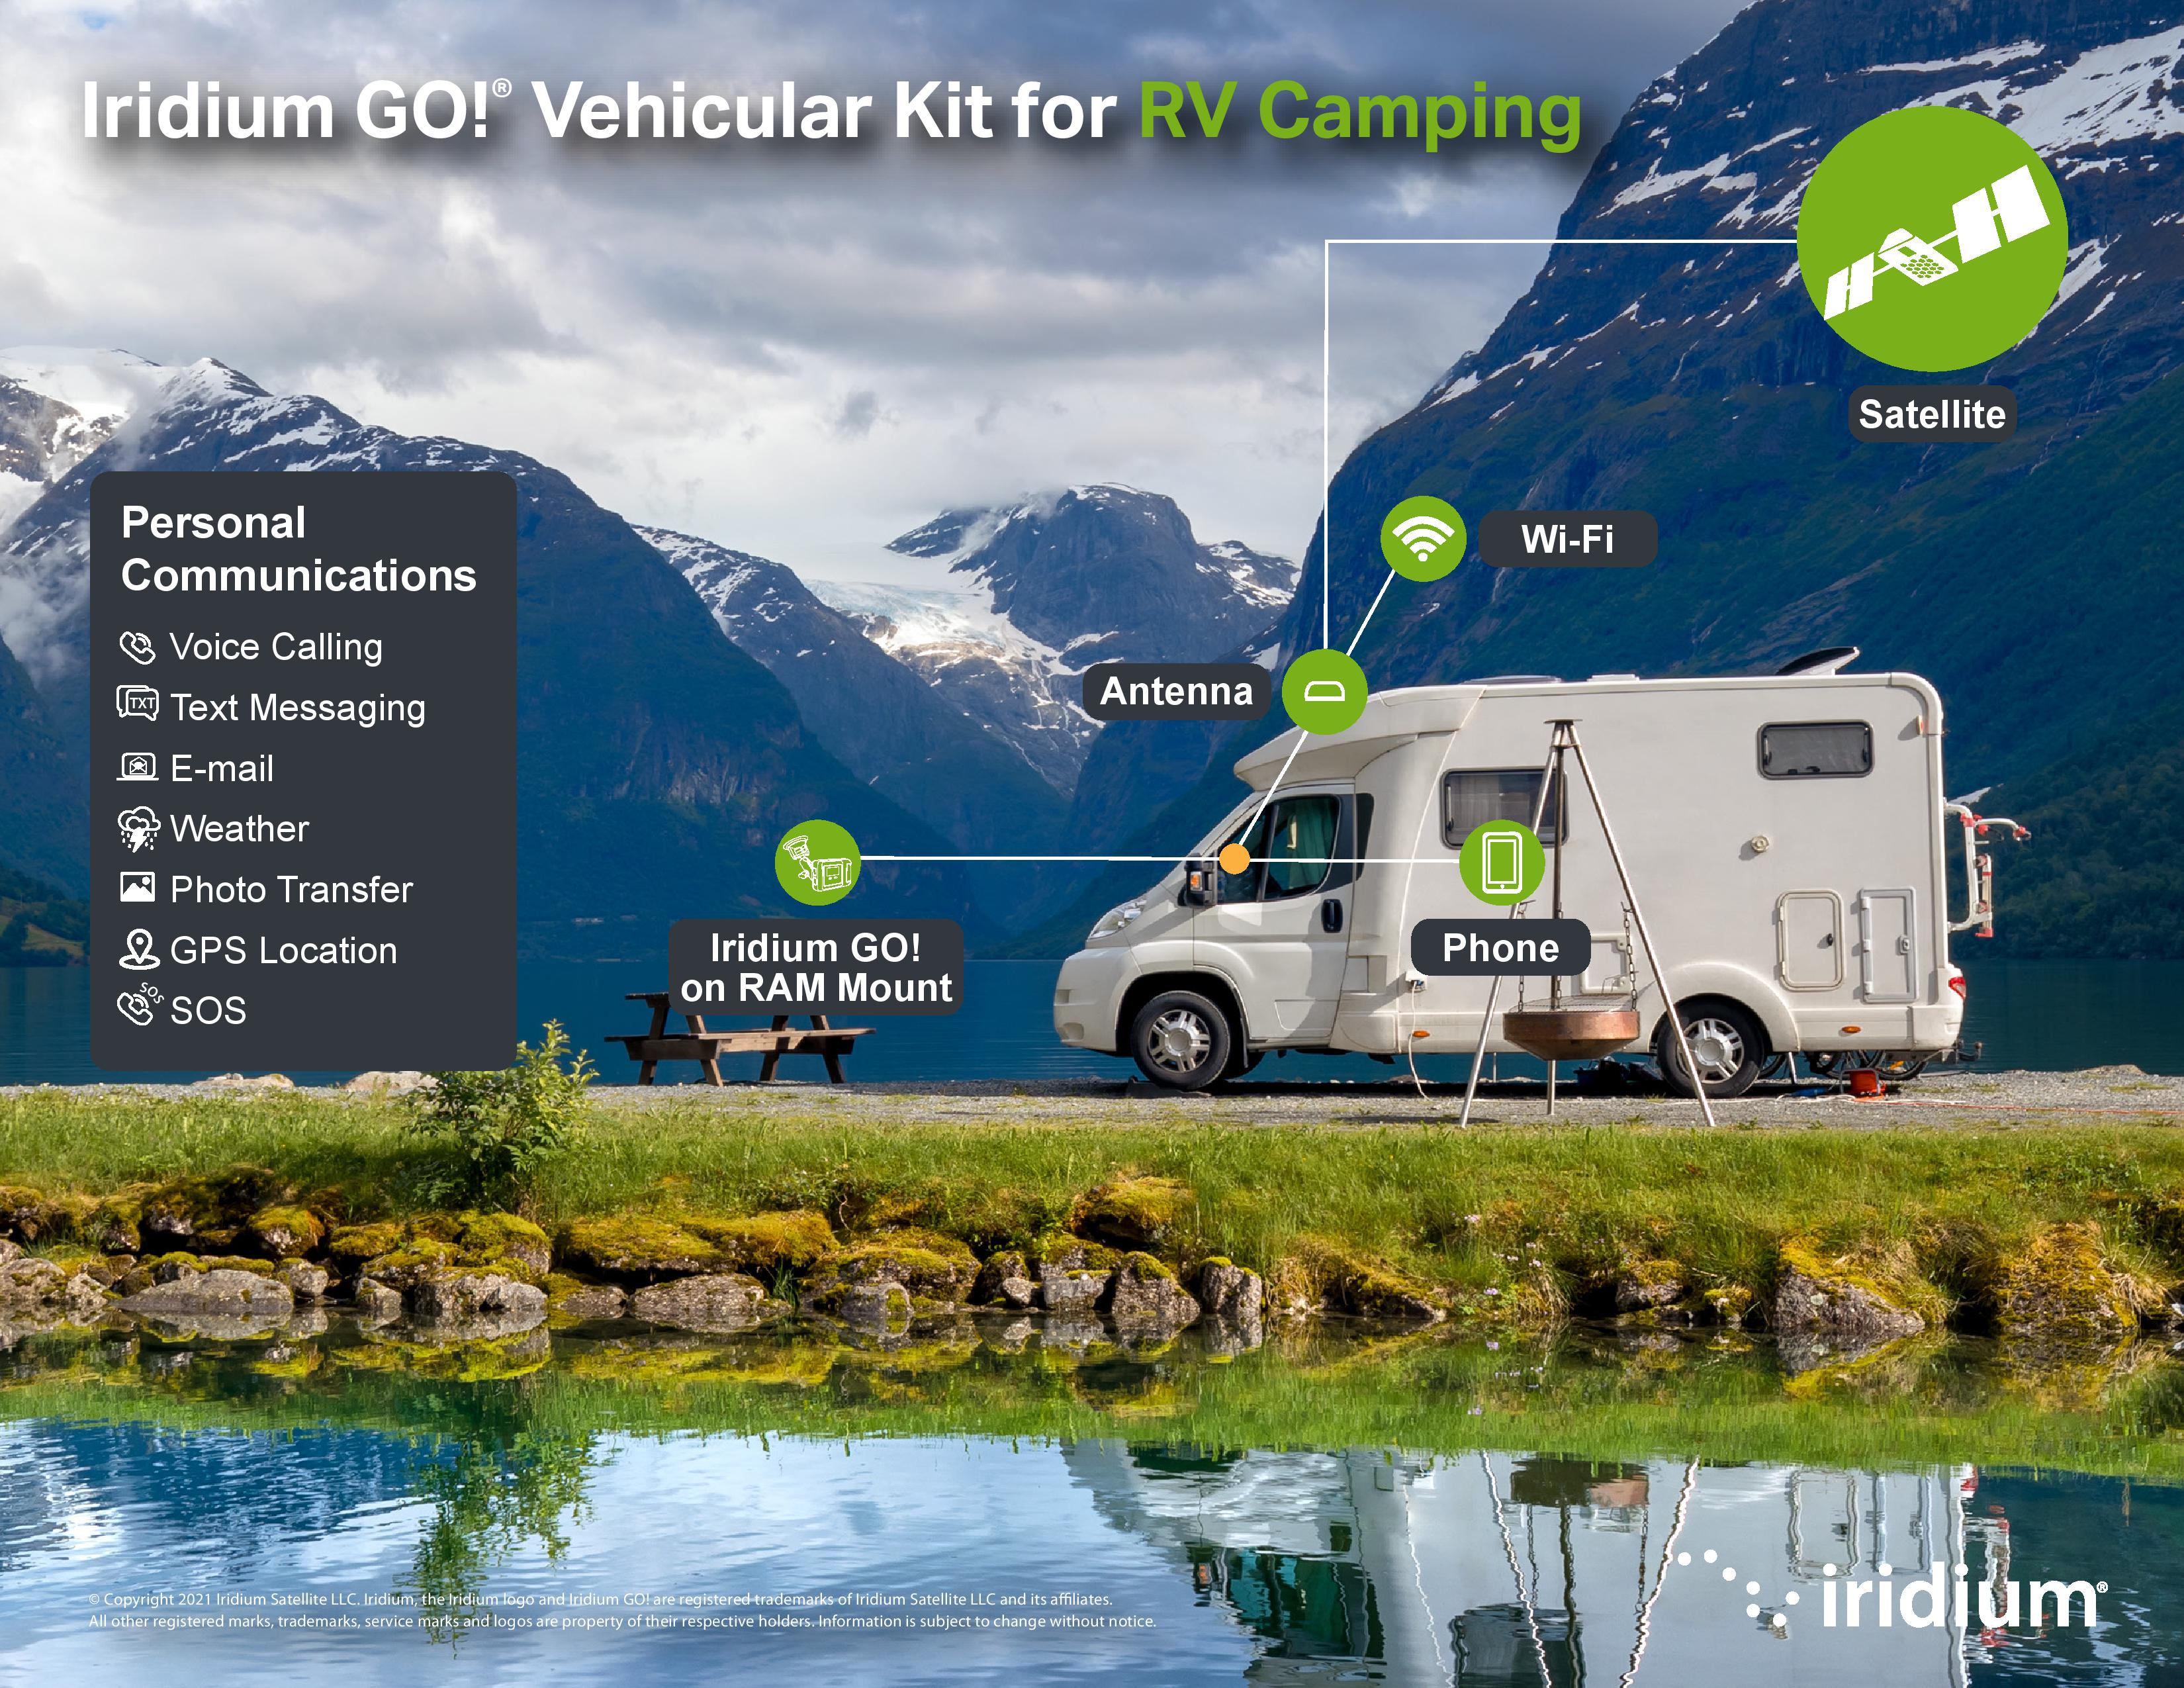 UC_Iridium_GO__Vehicular_Kit_Use_Cases_RV_Camping_APR21__1_-page-001.jpg